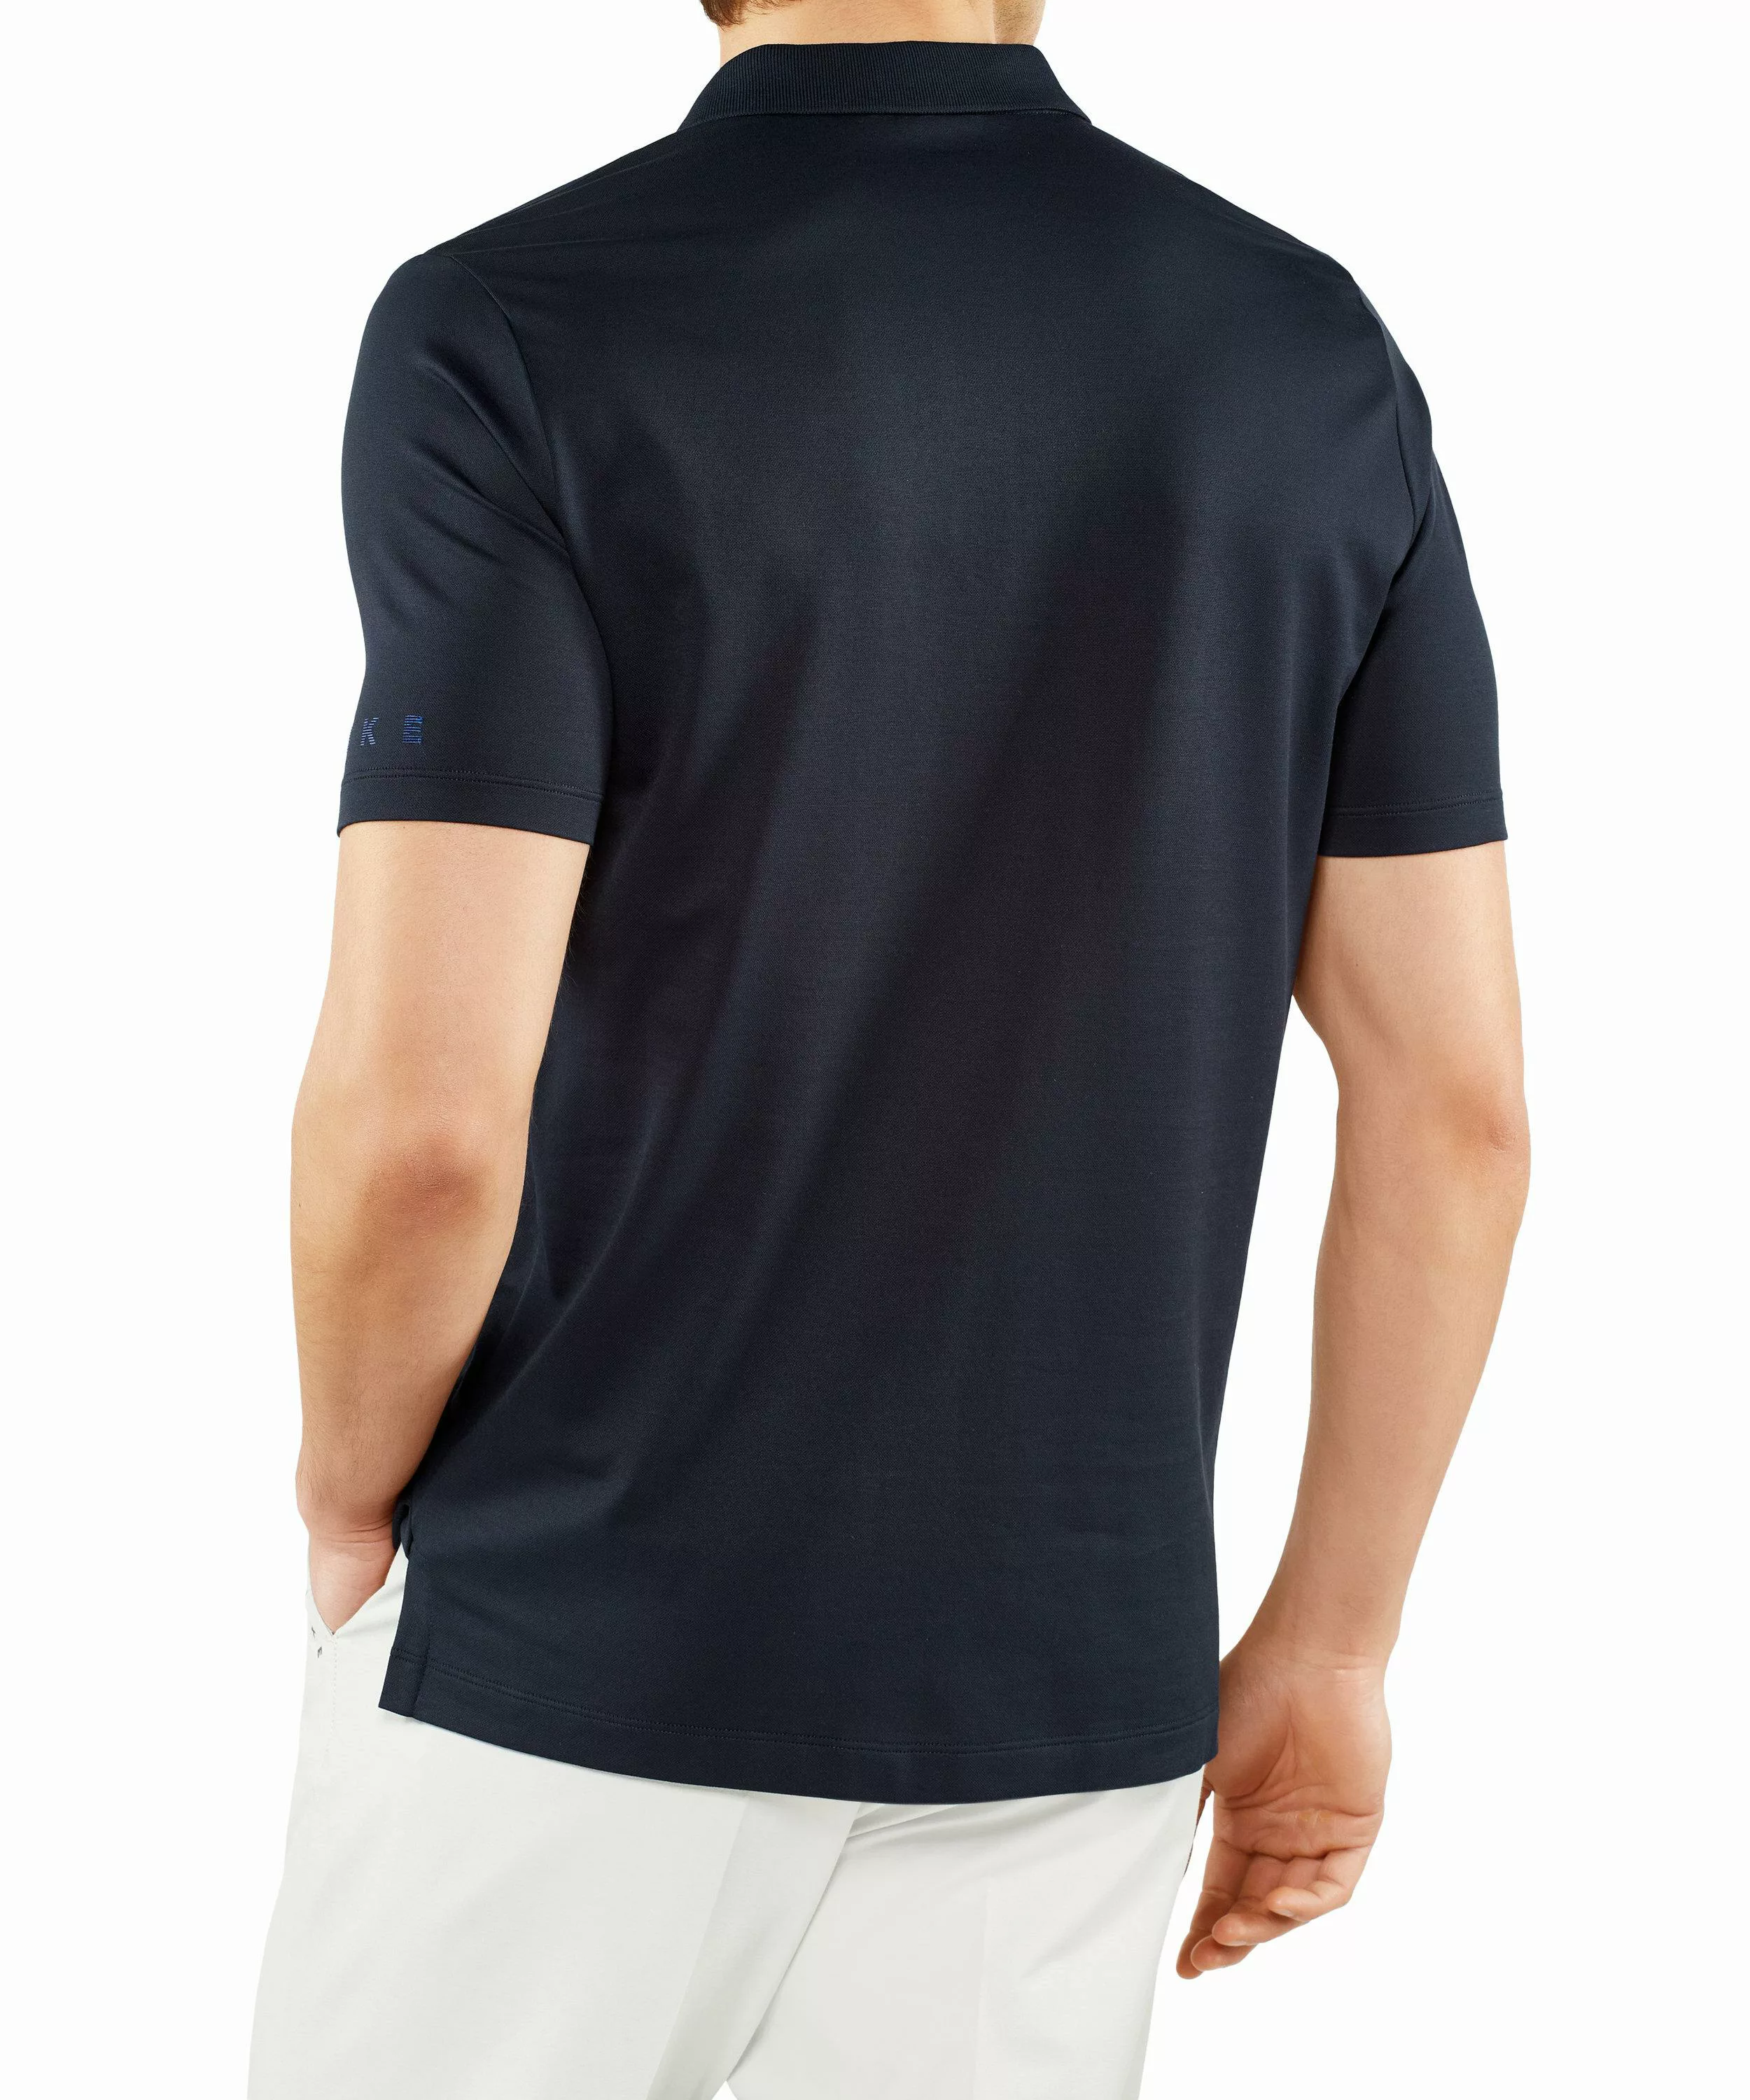 FALKE Herren Polo Shirt Polo, S, Blau, Baumwolle, 37583-643702 günstig online kaufen